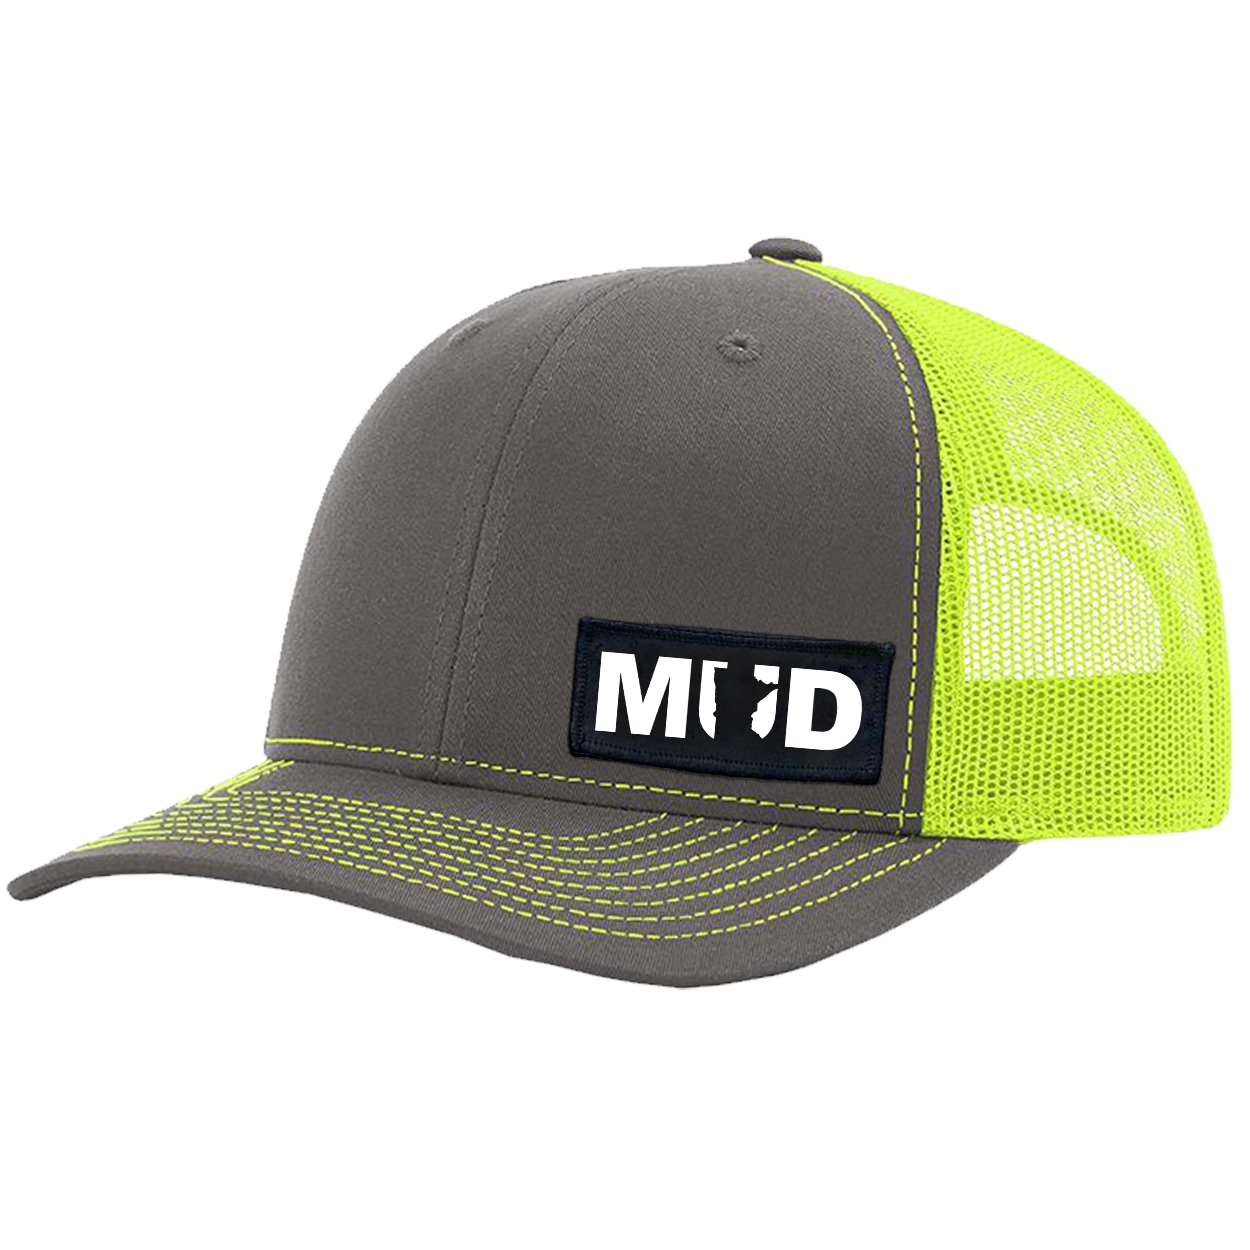 Mud Minnesota Night Out Woven Patch Snapback Trucker Hat Charcoal/Neon Yellow (White Logo)